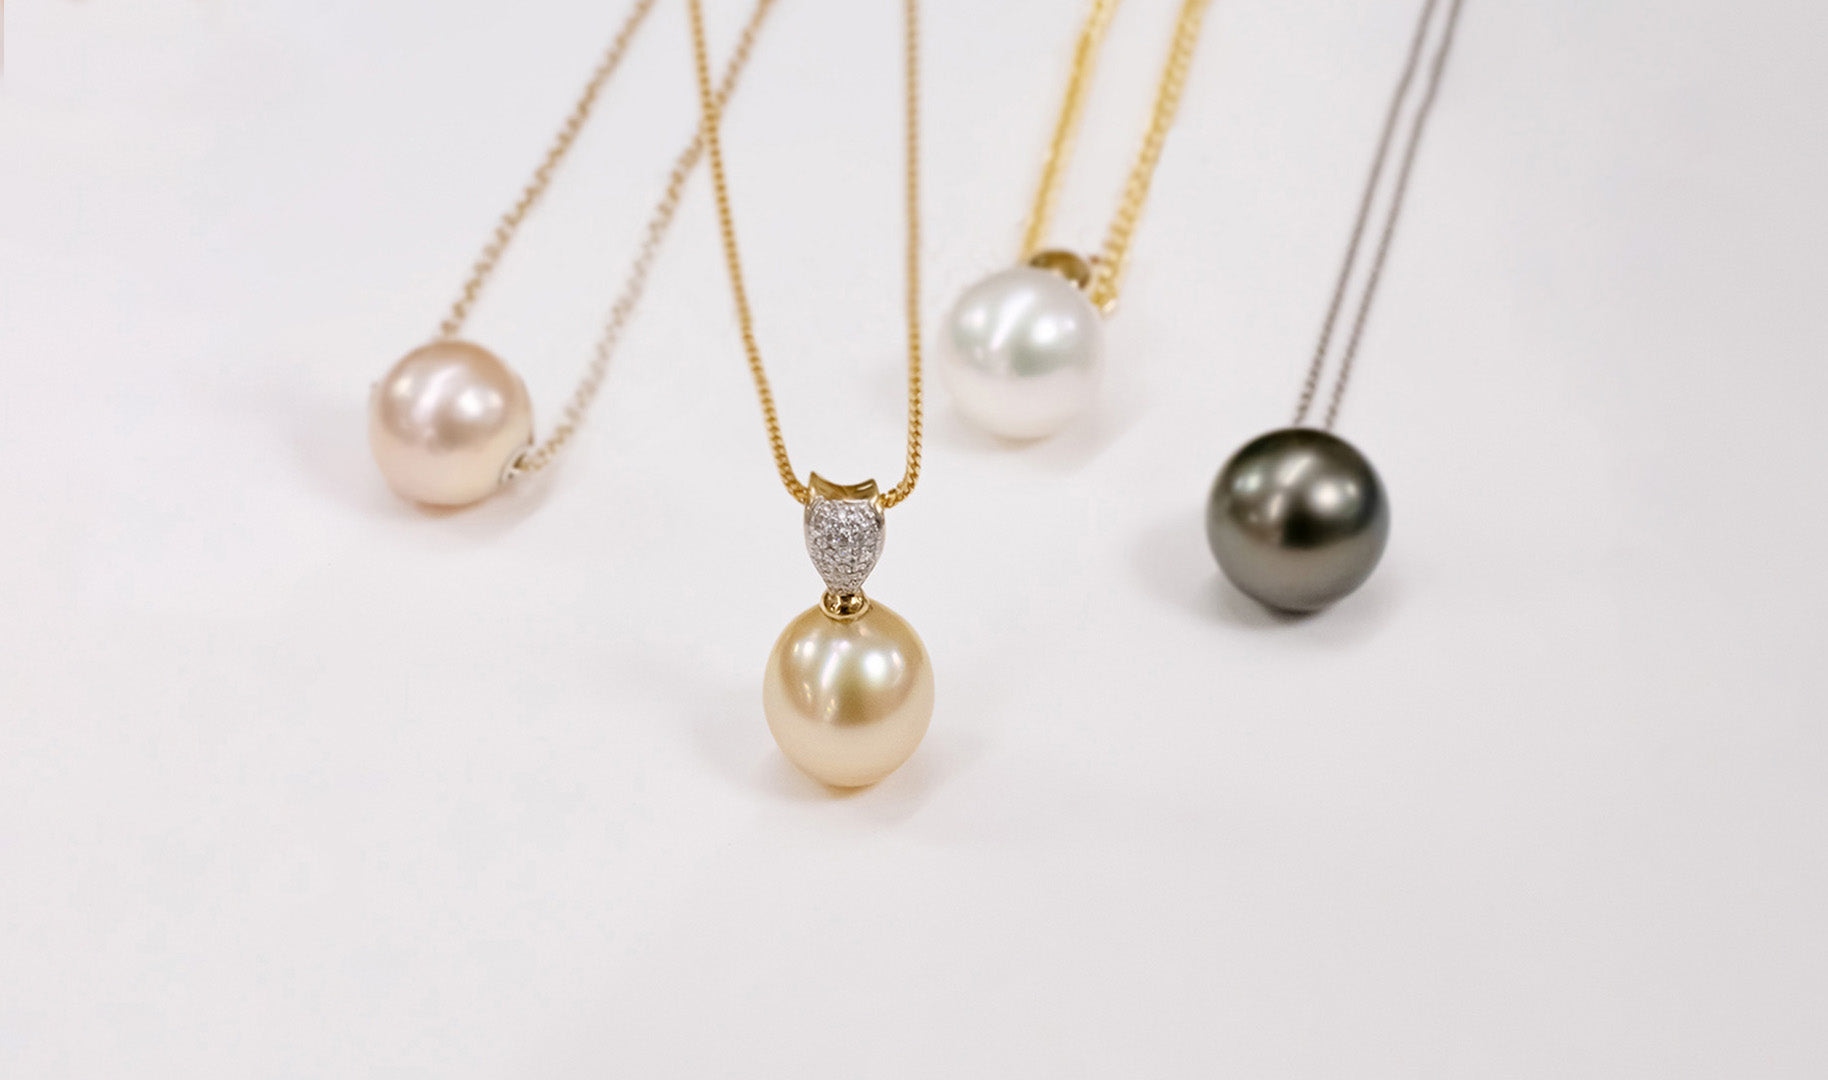 Pearl necklace prapging tee combo | Mens pearl necklace, Men with pearl  necklace, Pearl necklace outfit